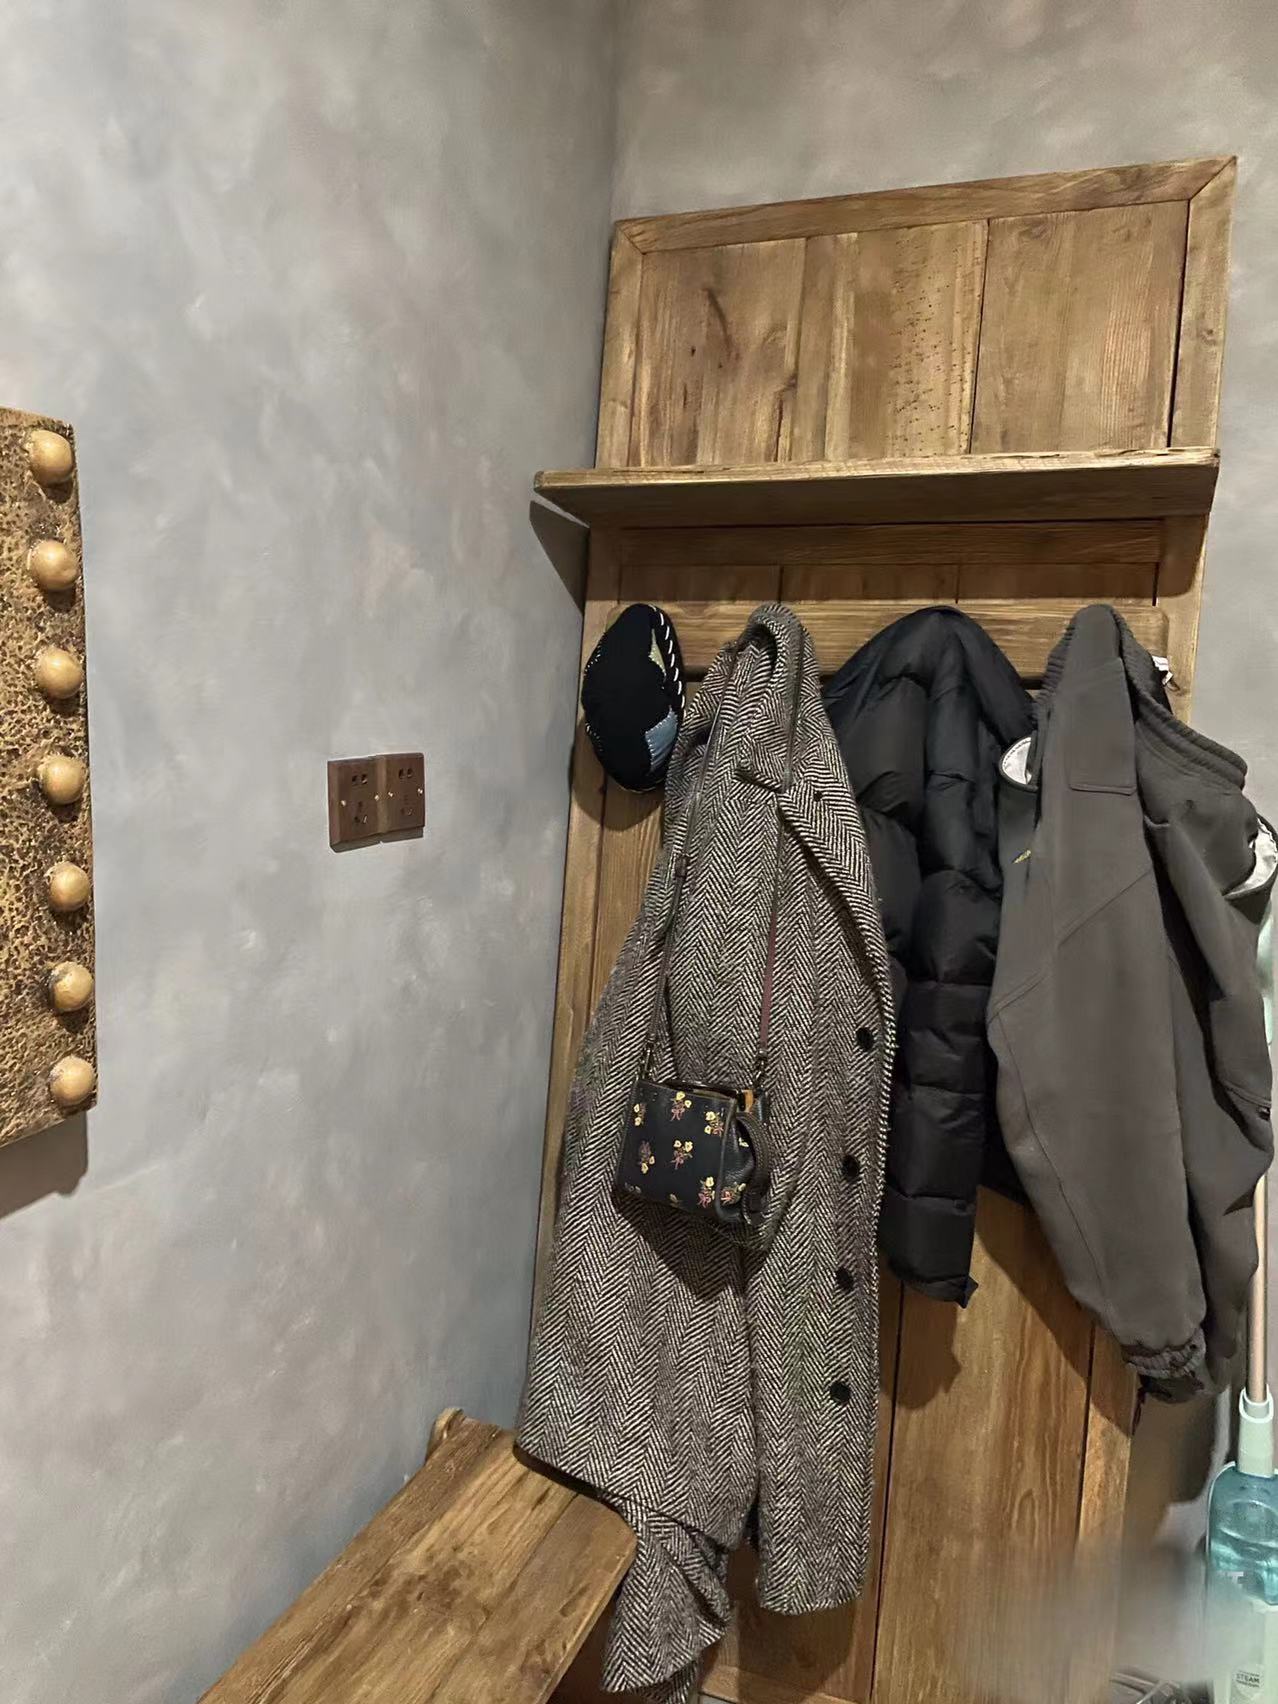 Solid Wood Hallway Wall Garment Organiser Panel Rack - 4 Seasons Home Gadgets